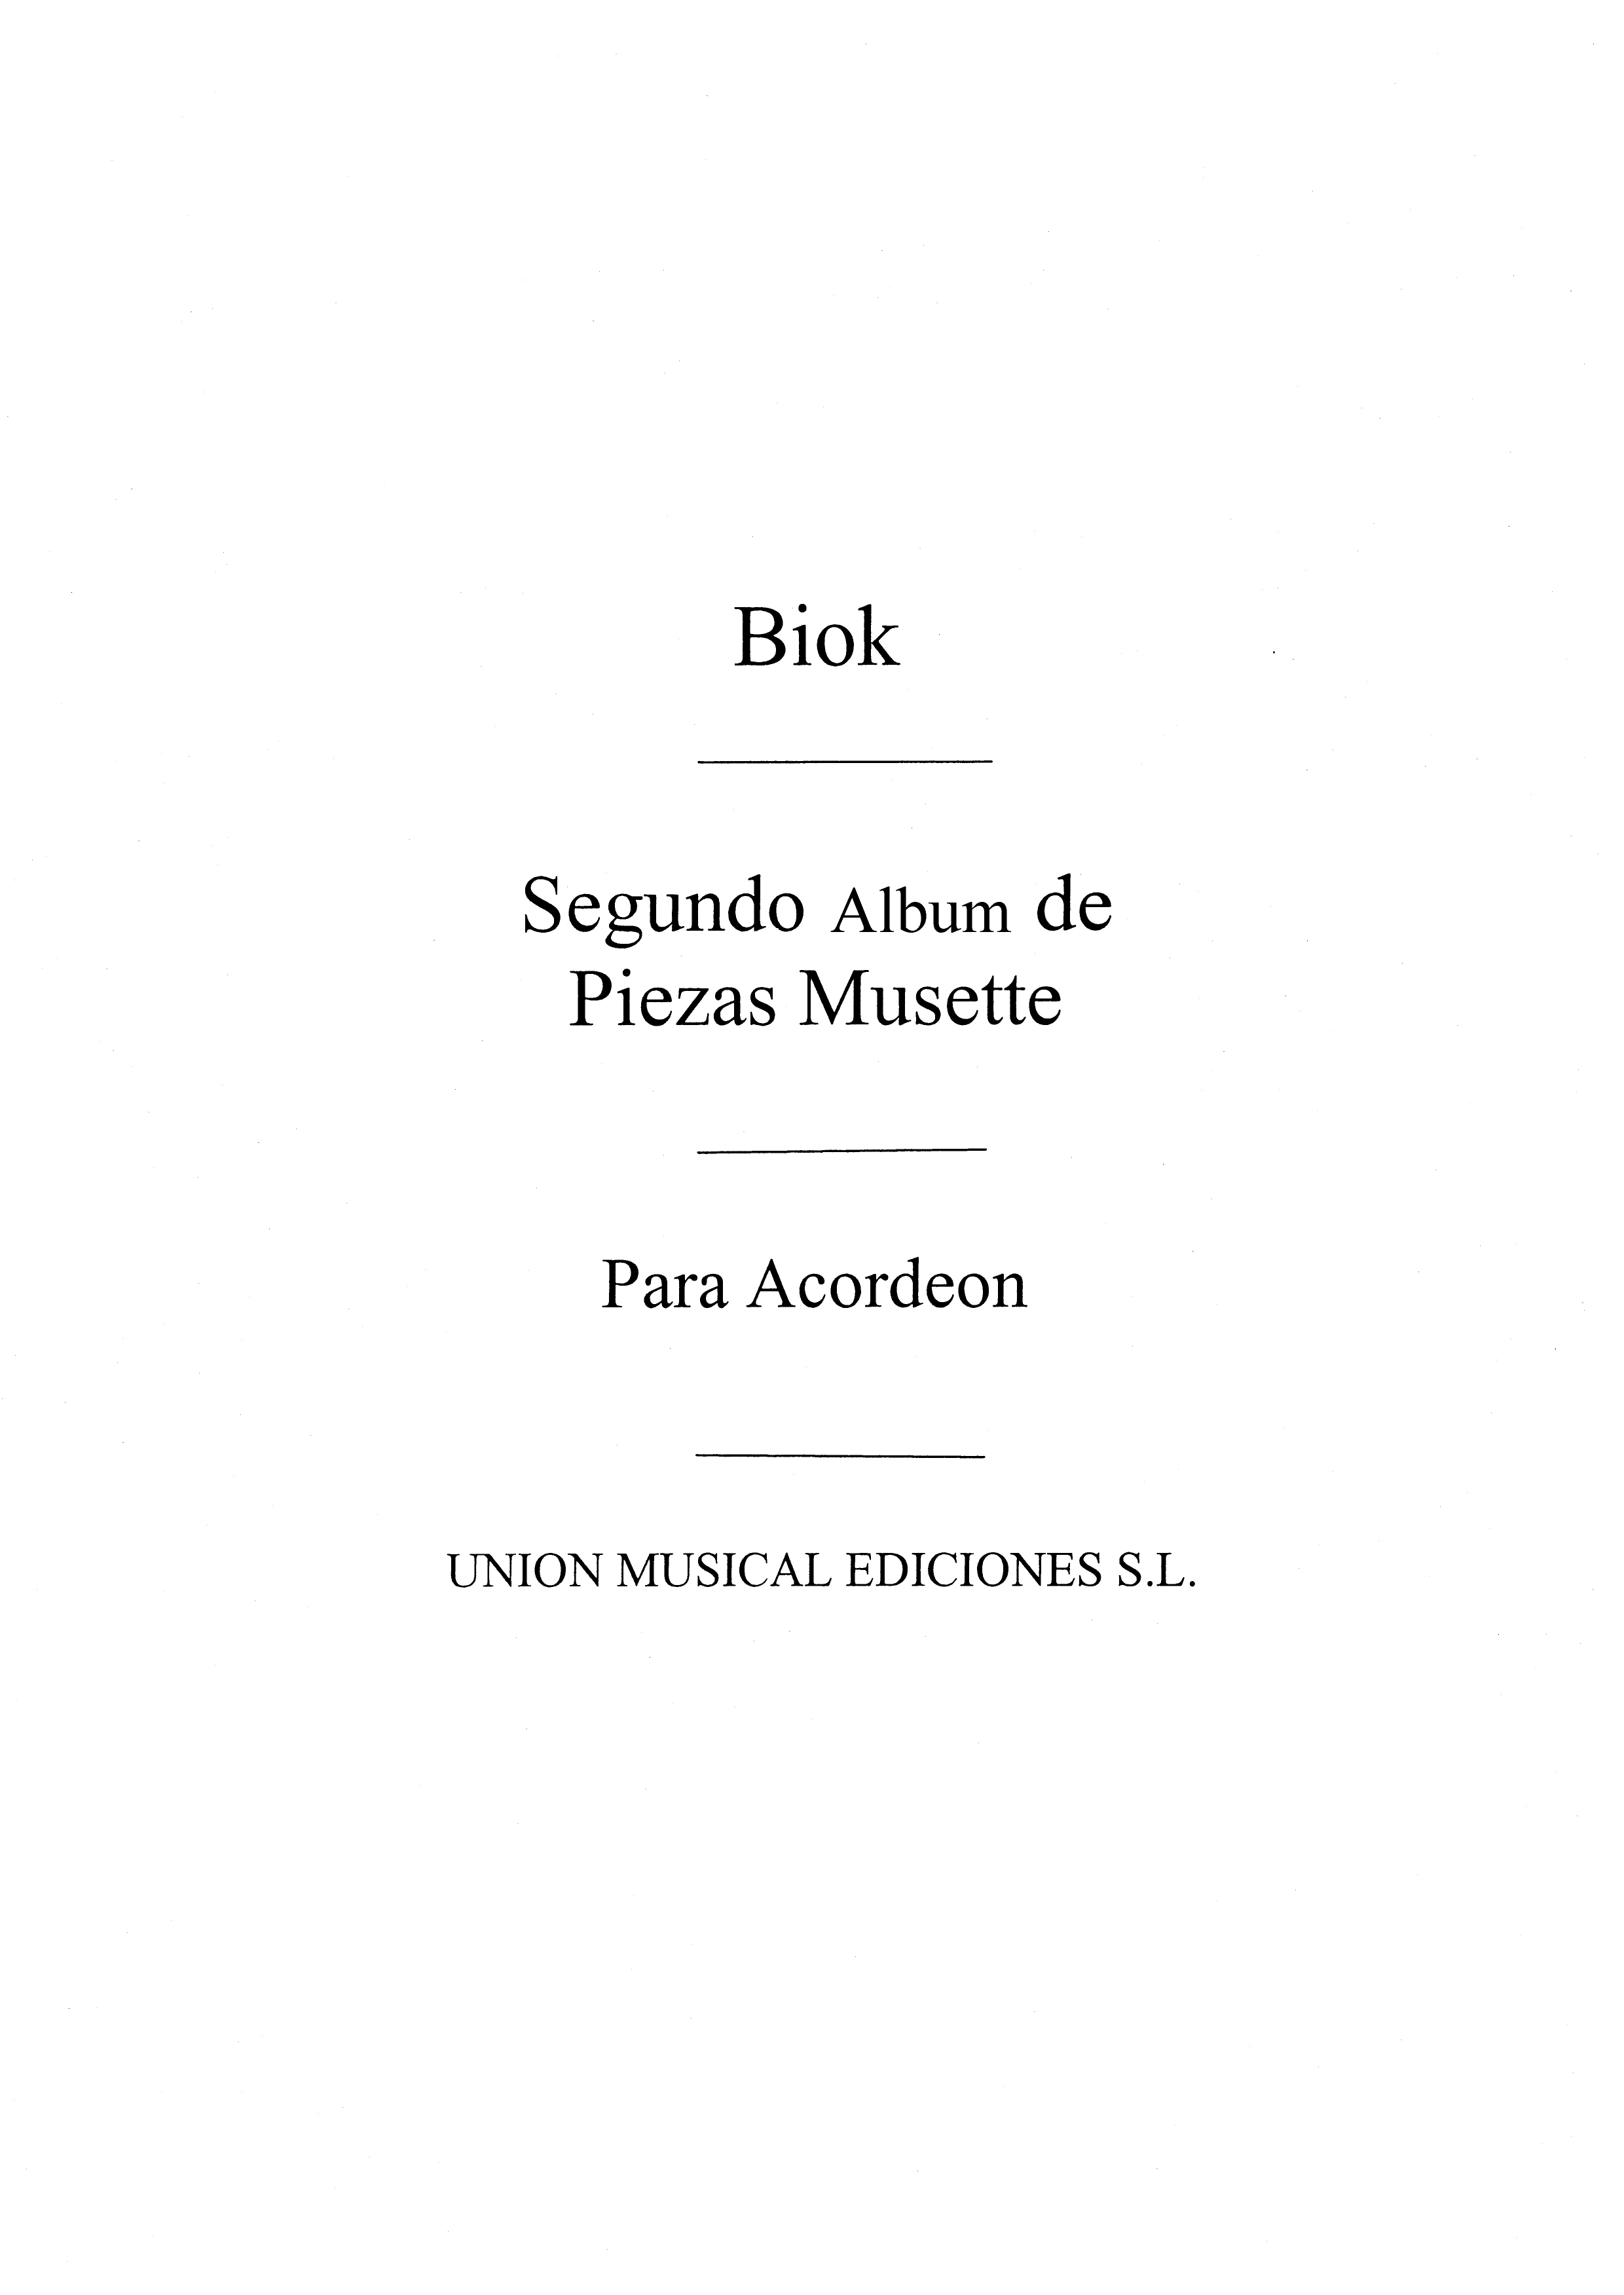 Biok: Segundo Album De Piezas Musette for Accordion